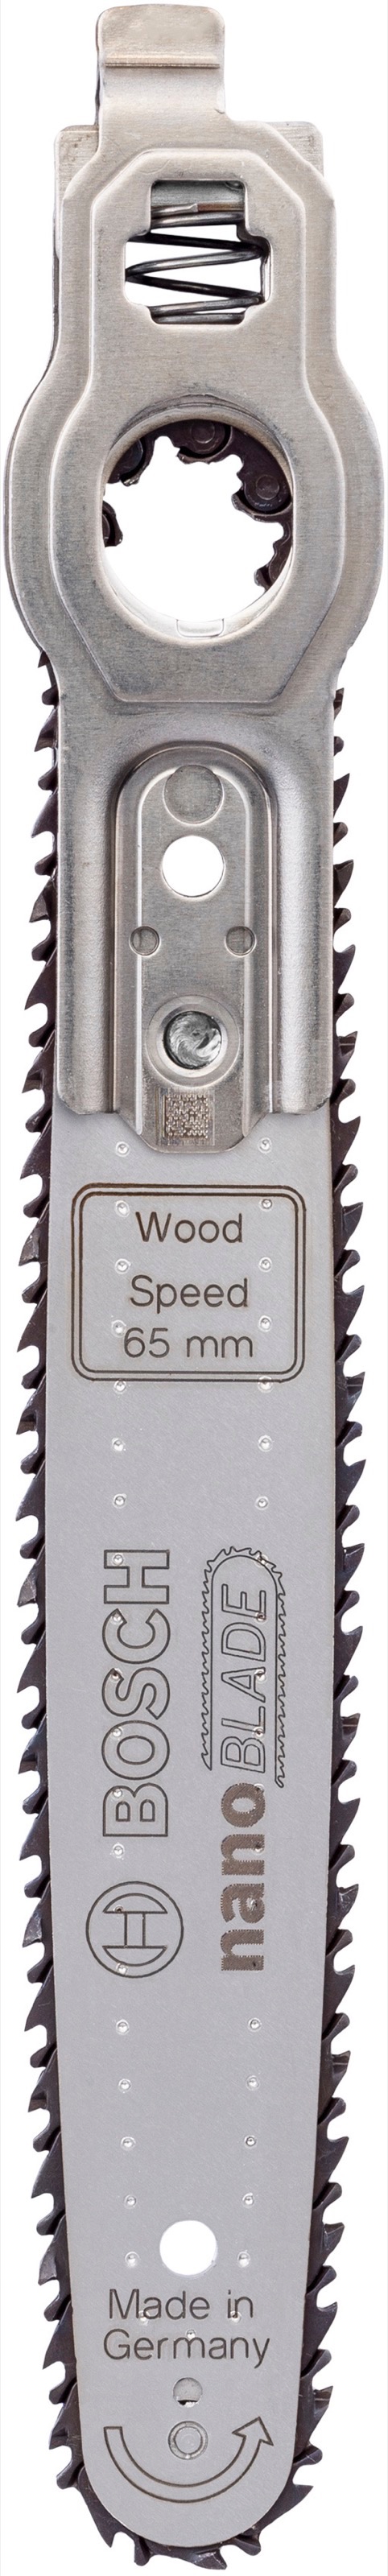 nanoBLADE Wood Speed 65